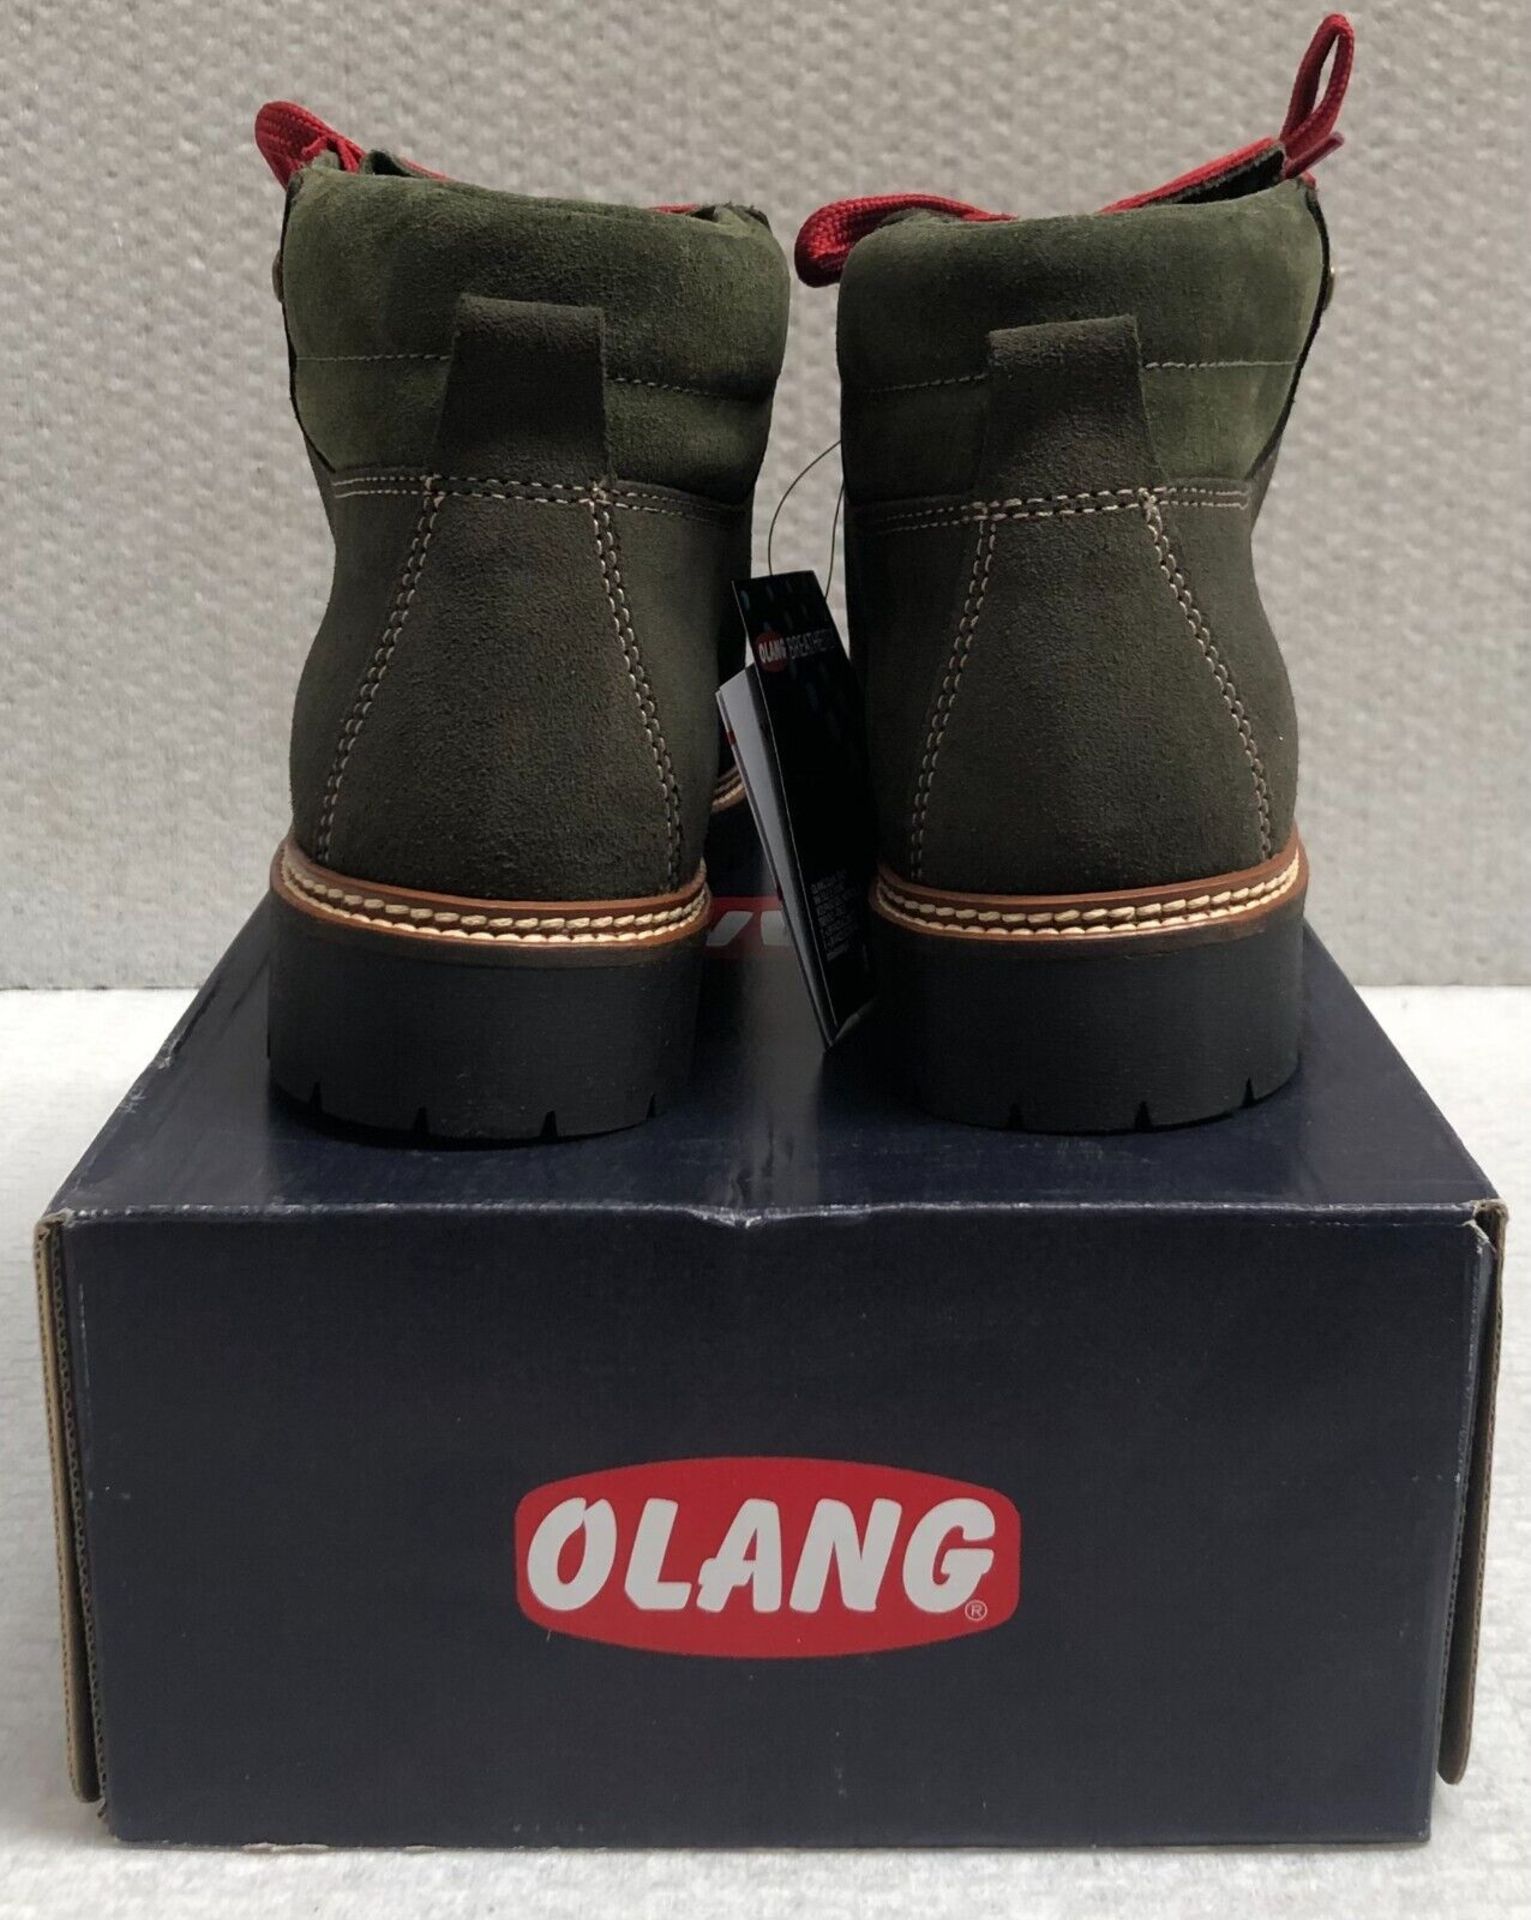 1 x Pair of Designer Olang Women's Winter Boots - Merano.Win.BTX 834 Muschio - Euro Size 40 - New - Image 6 of 6